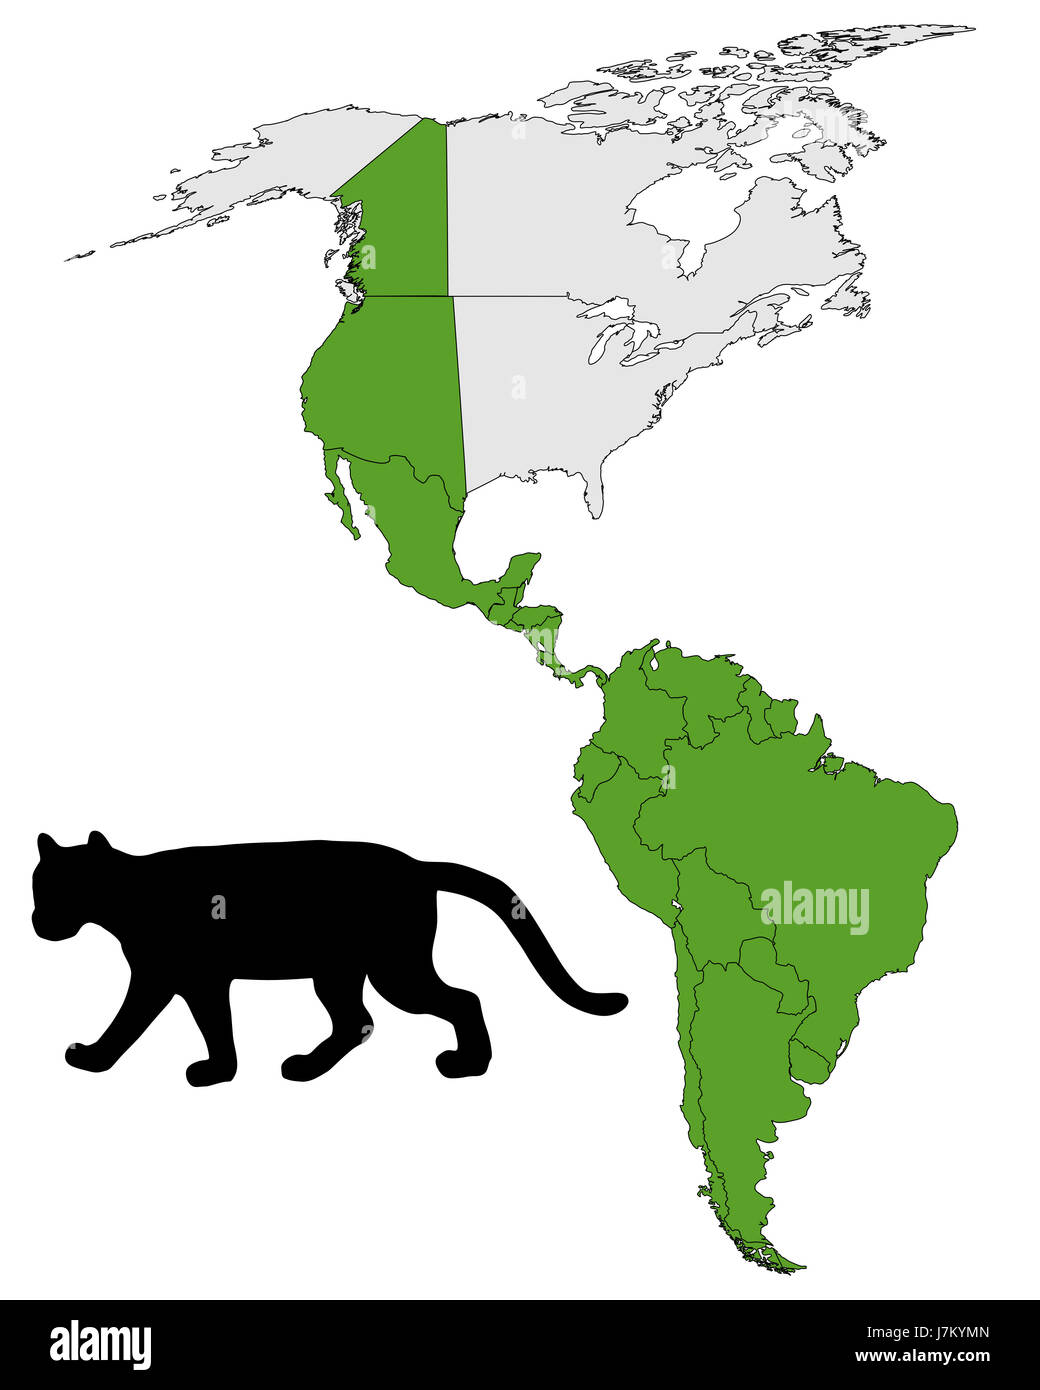 cougar distribution map Stock Photo - Alamy